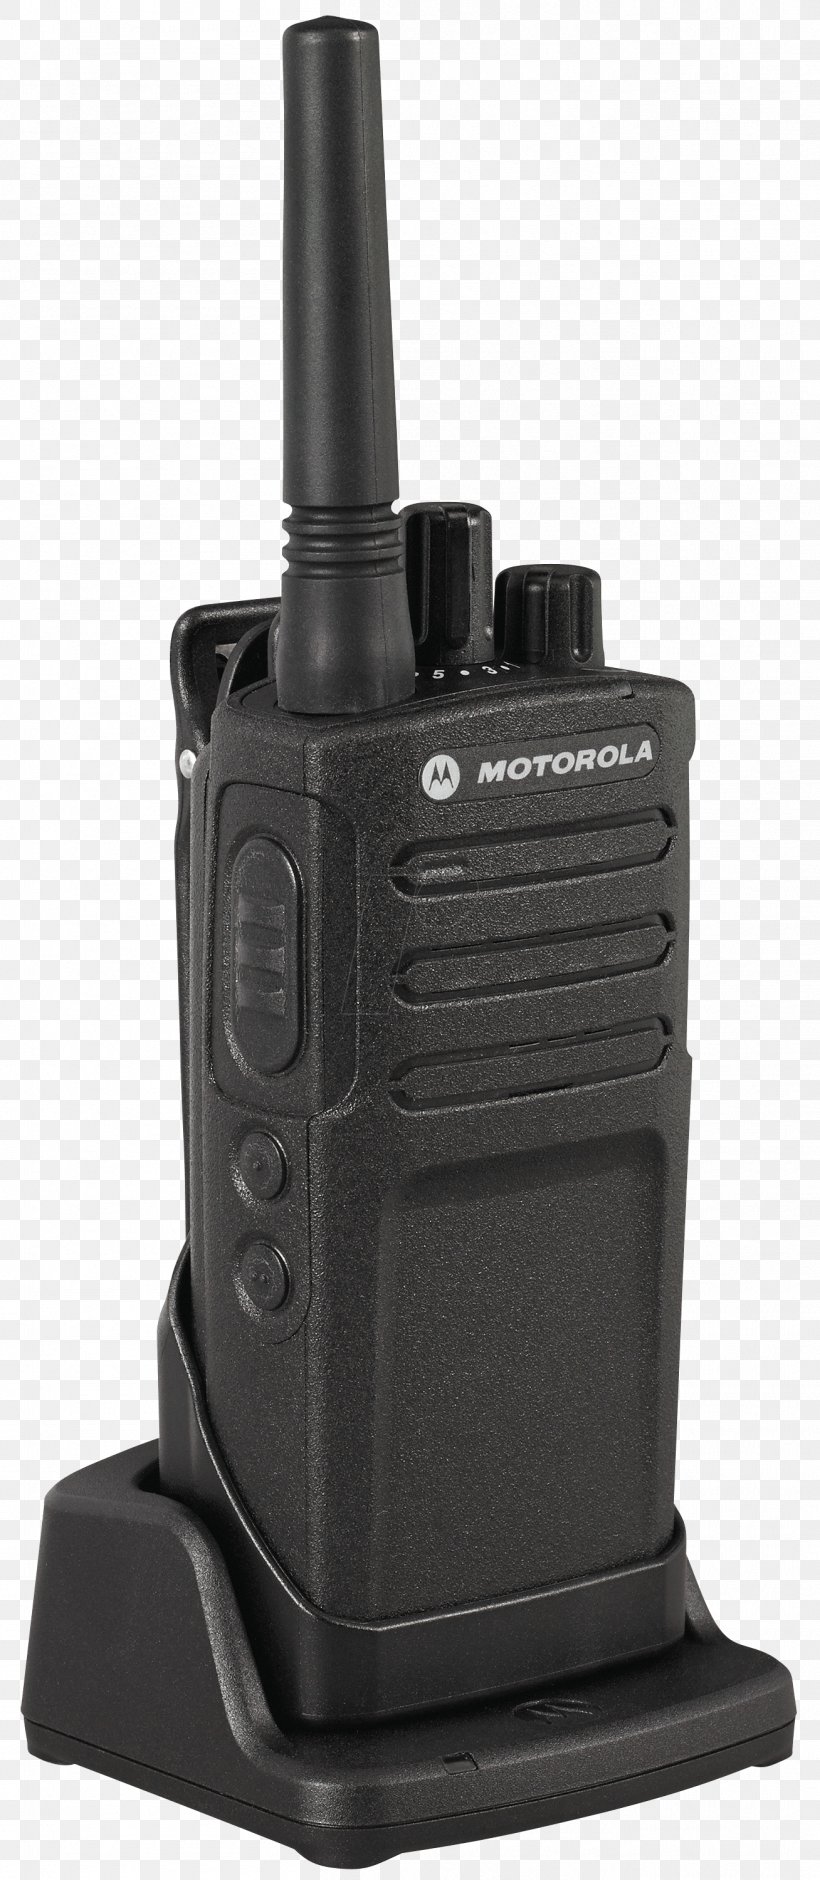 Microphone PMR446 Walkie-talkie Two-way Radio Motorola Two Way, PNG, 1308x3000px, Microphone, Communication Device, Electronic Device, Motorola, Motorola Clp446 Download Free